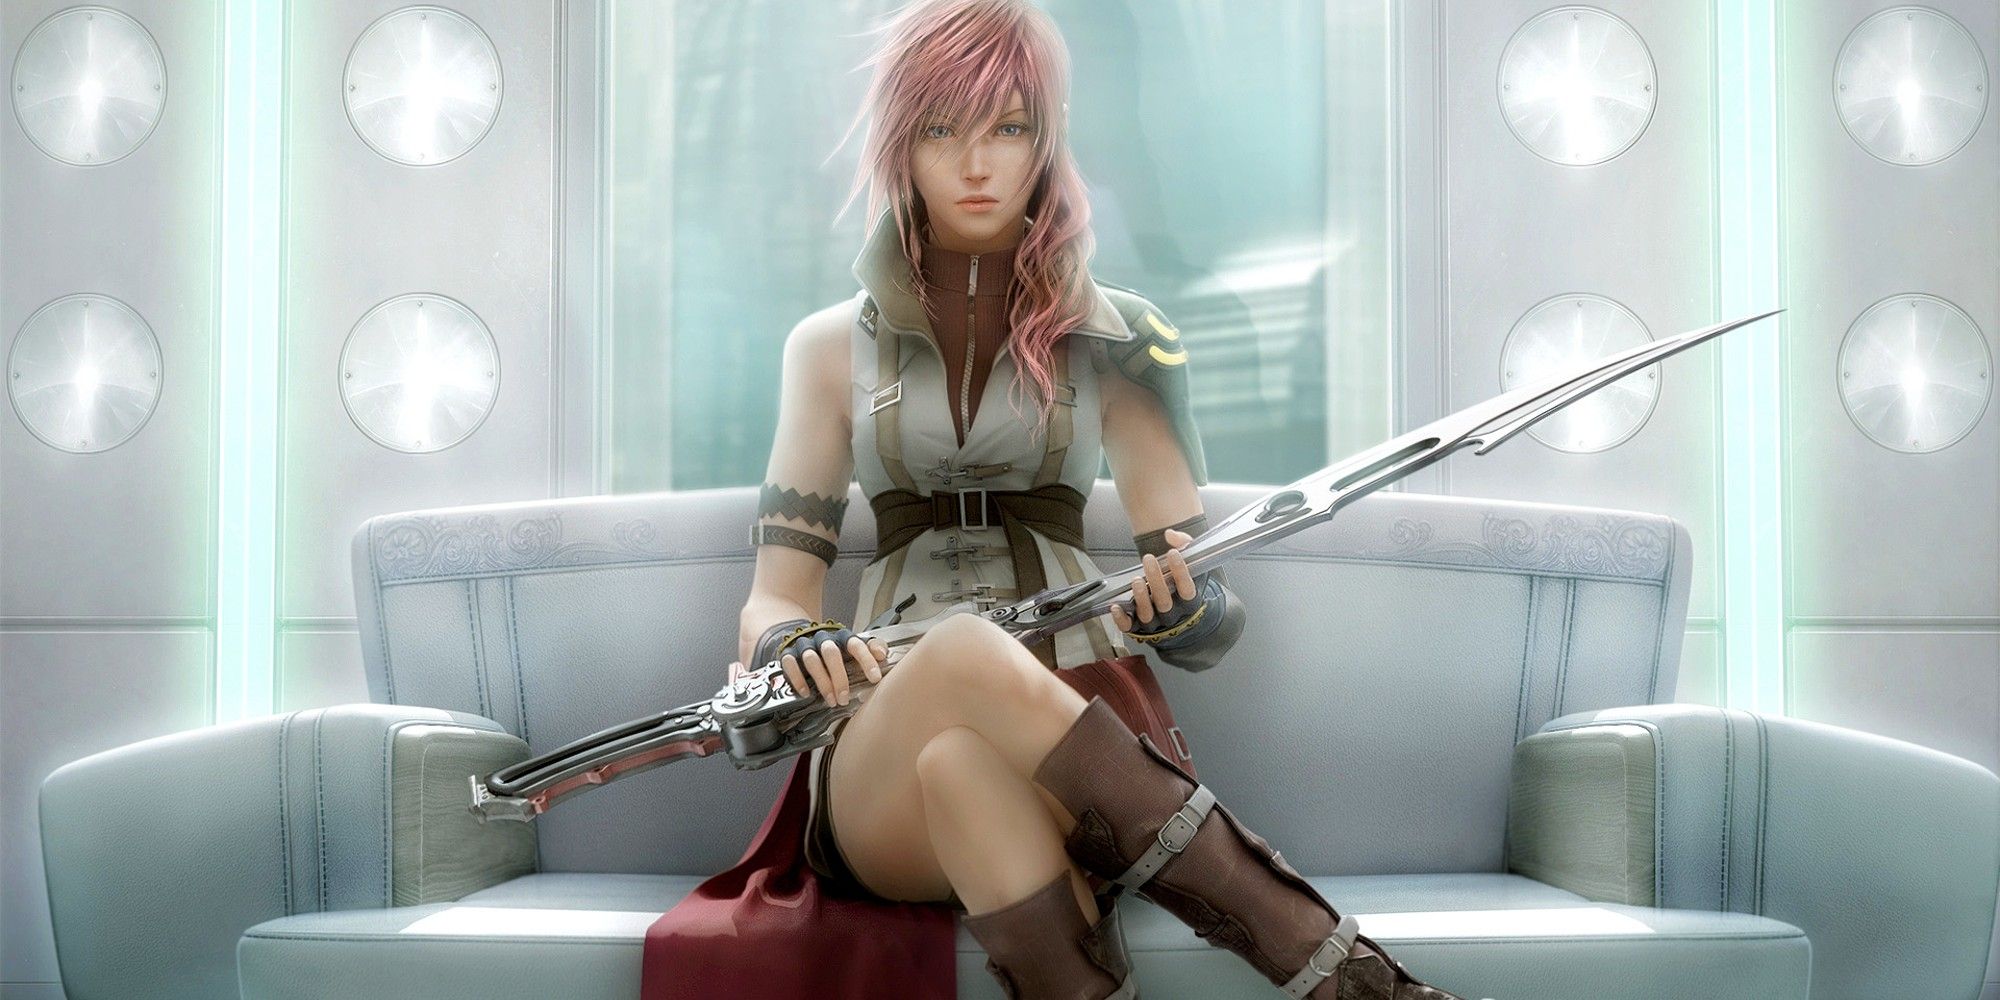 Queen Lightning holding her sword chilling - Final Fantasy 13